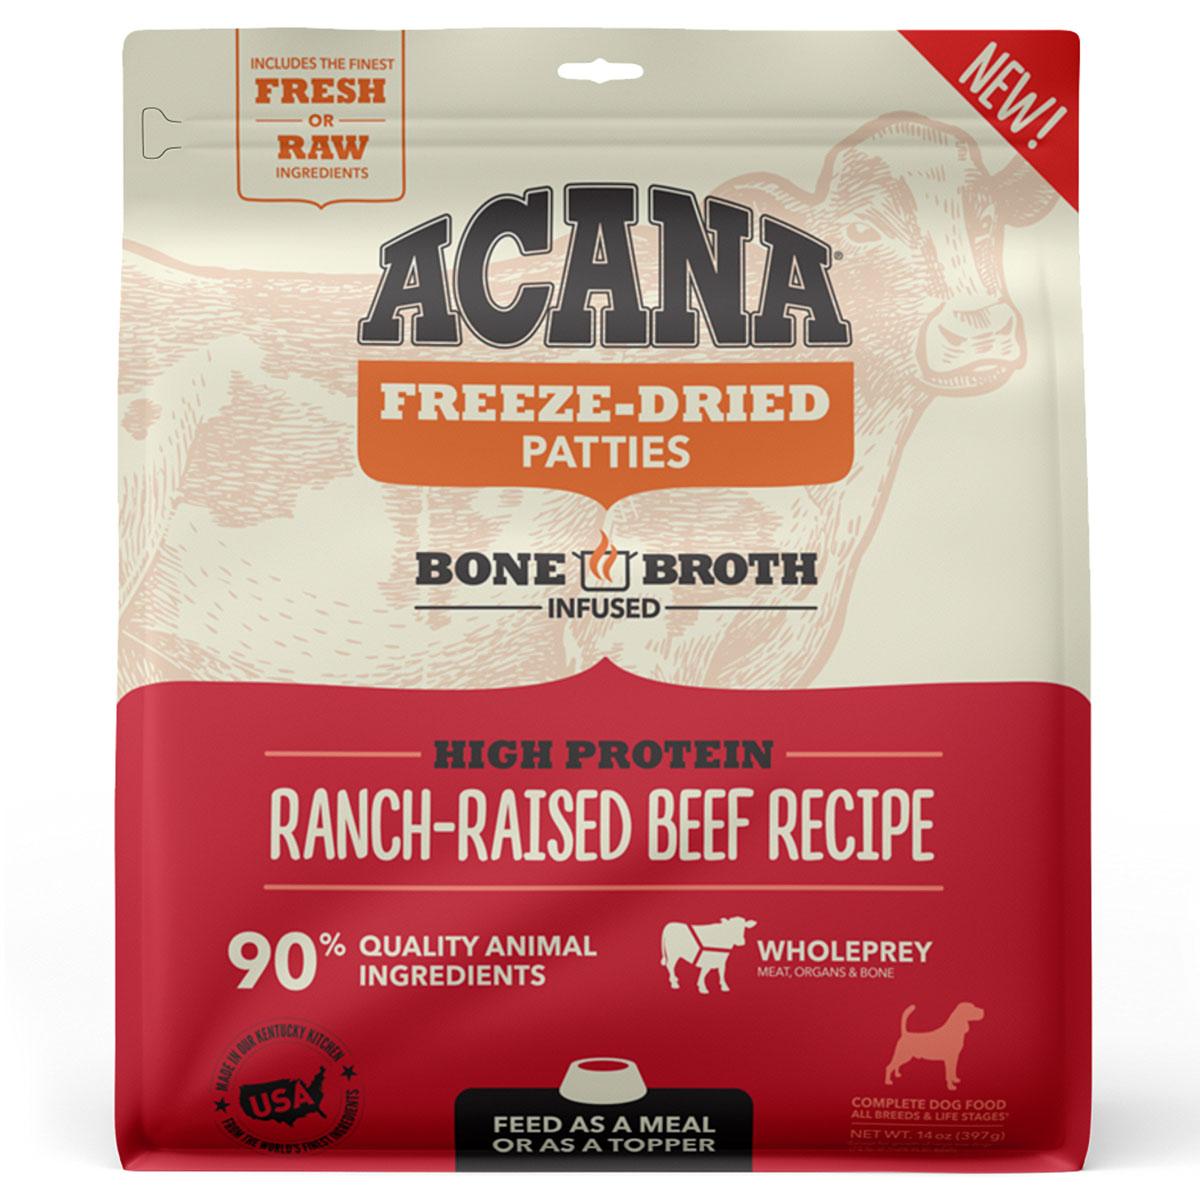 Acana Freeze-Dried Patties Dog Food - Ranch-Raised Beef Recipe